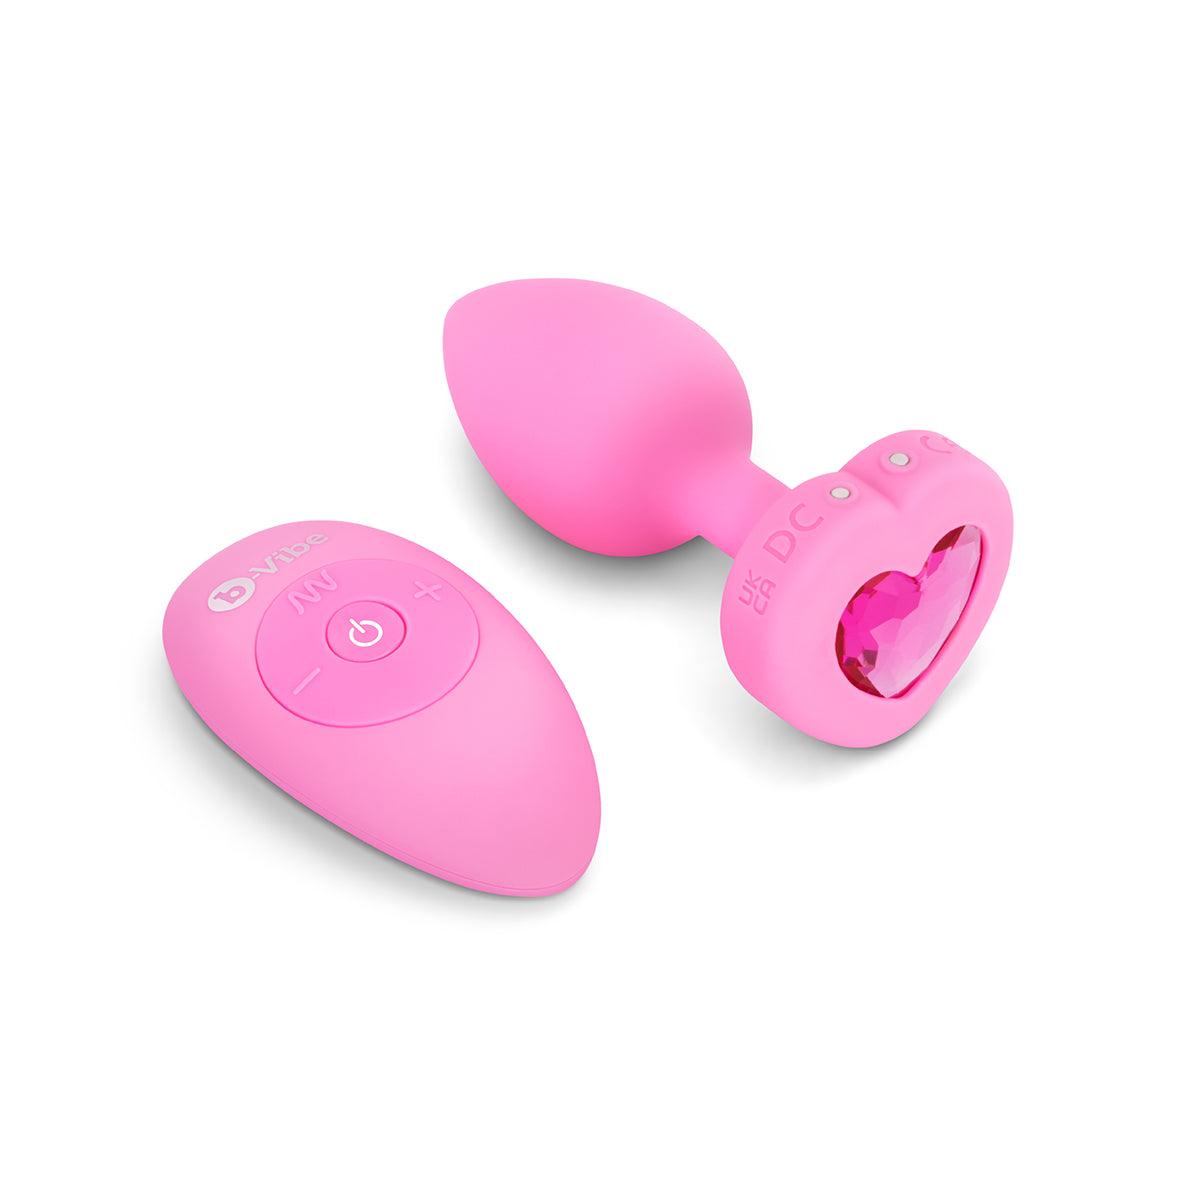 B-Vibe Vibrating Heart Plug Small/Medium - Pink Topaz - shop enby